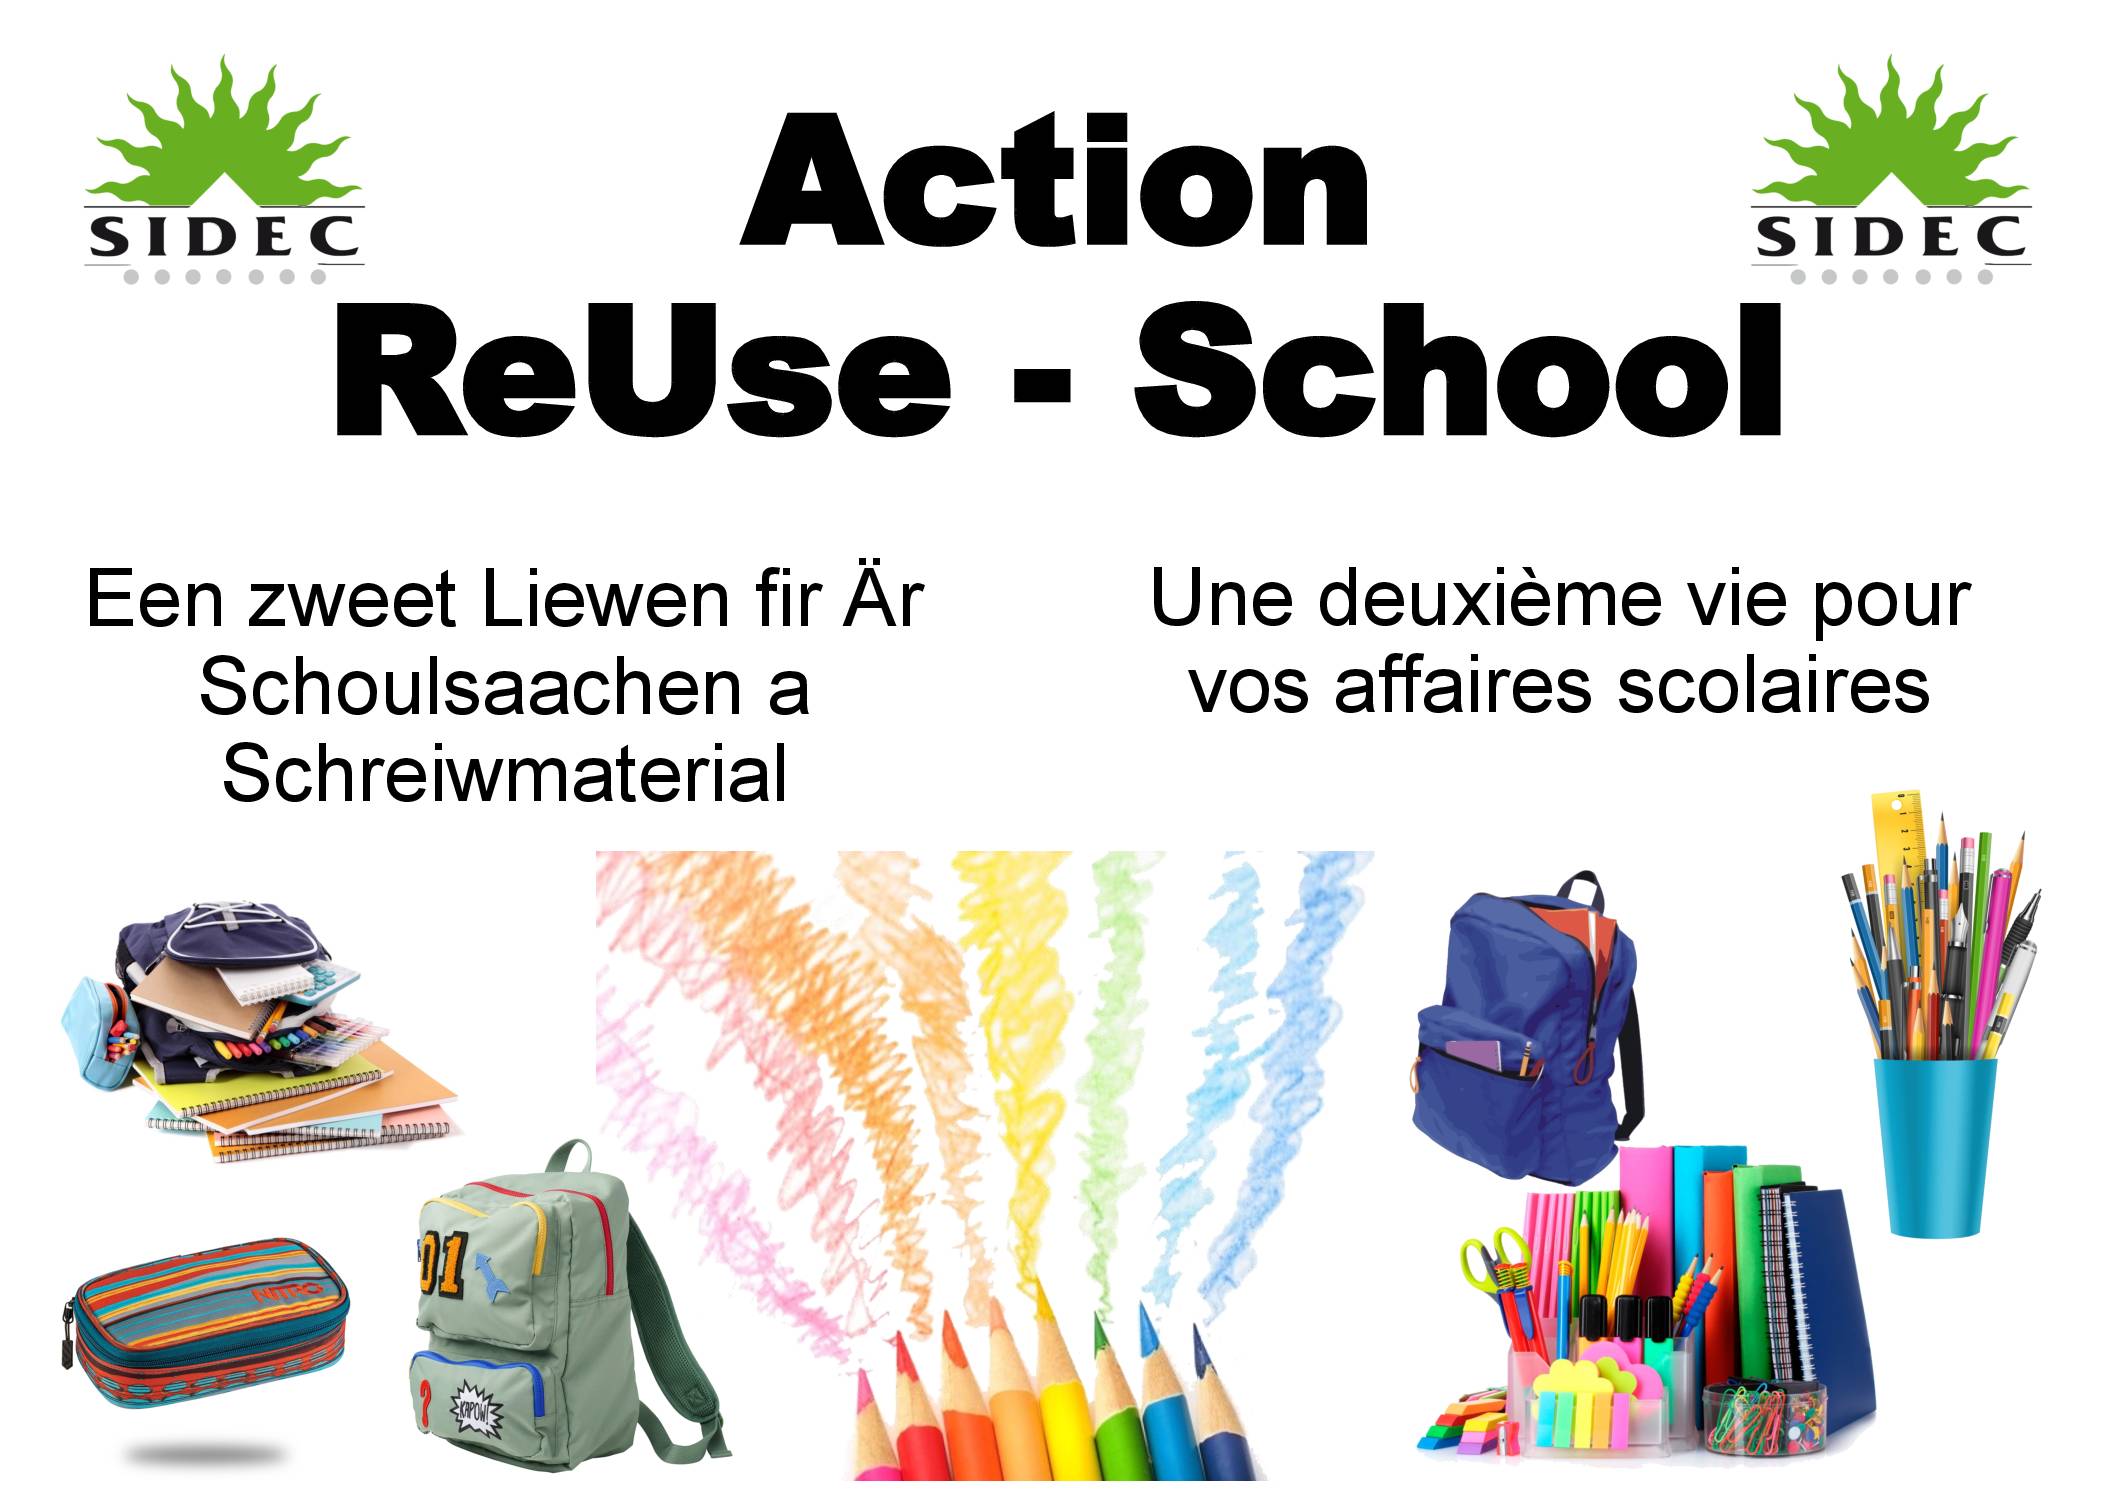 Action ReUse School - Sidec